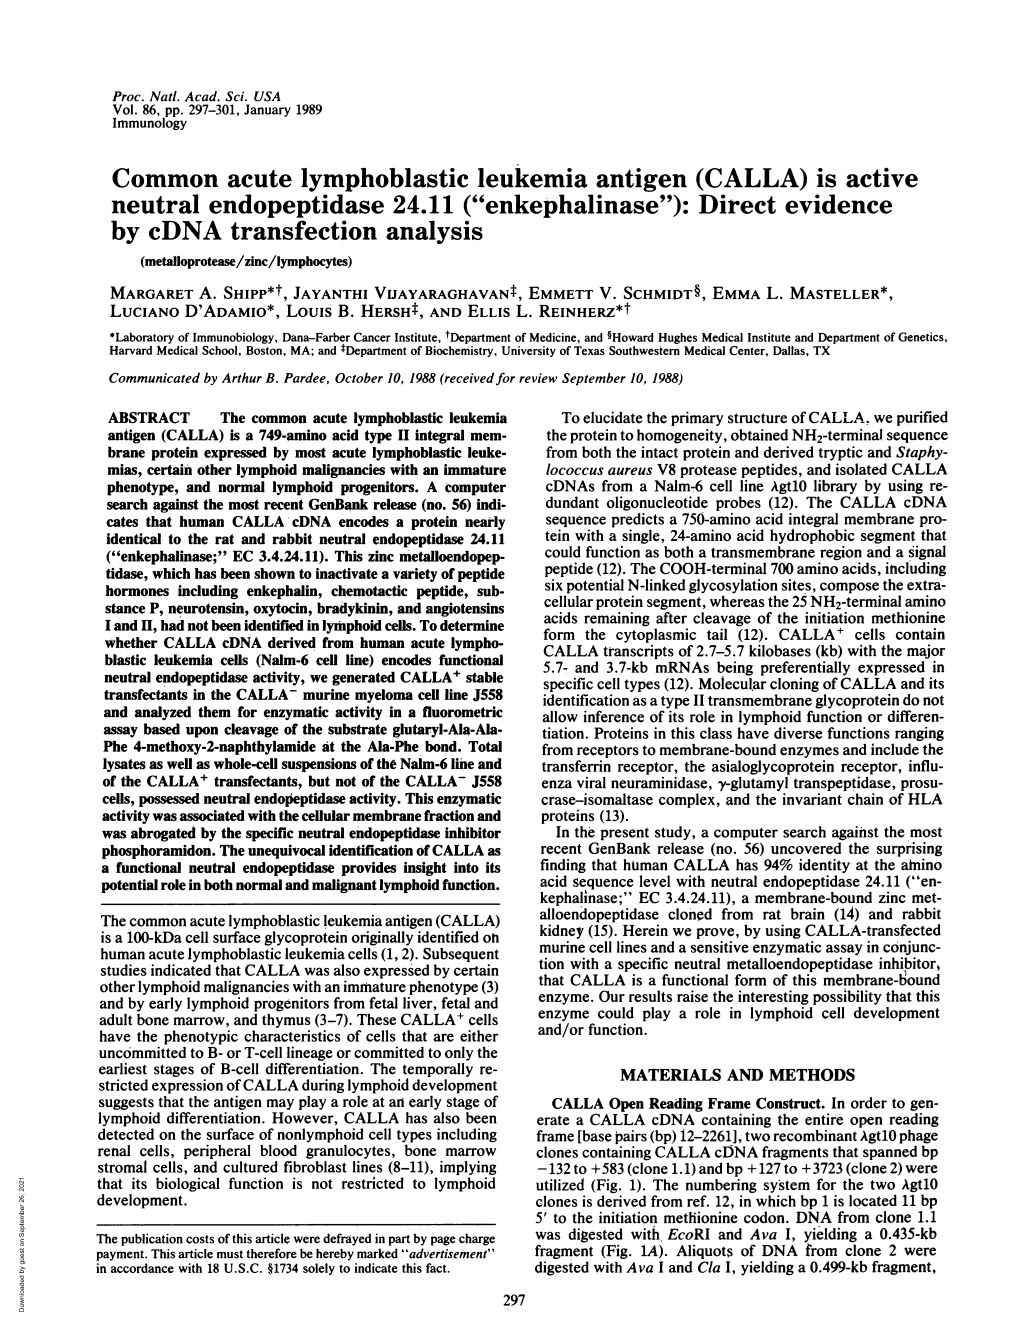 (CALLA) Is Active Neutral Endopeptidase 24.11 ("Enkephalinase"): Direct Evidence by Cdna Transfection Analysis (Metalloprotease/Zinc/Lymphocytes) MARGARET A